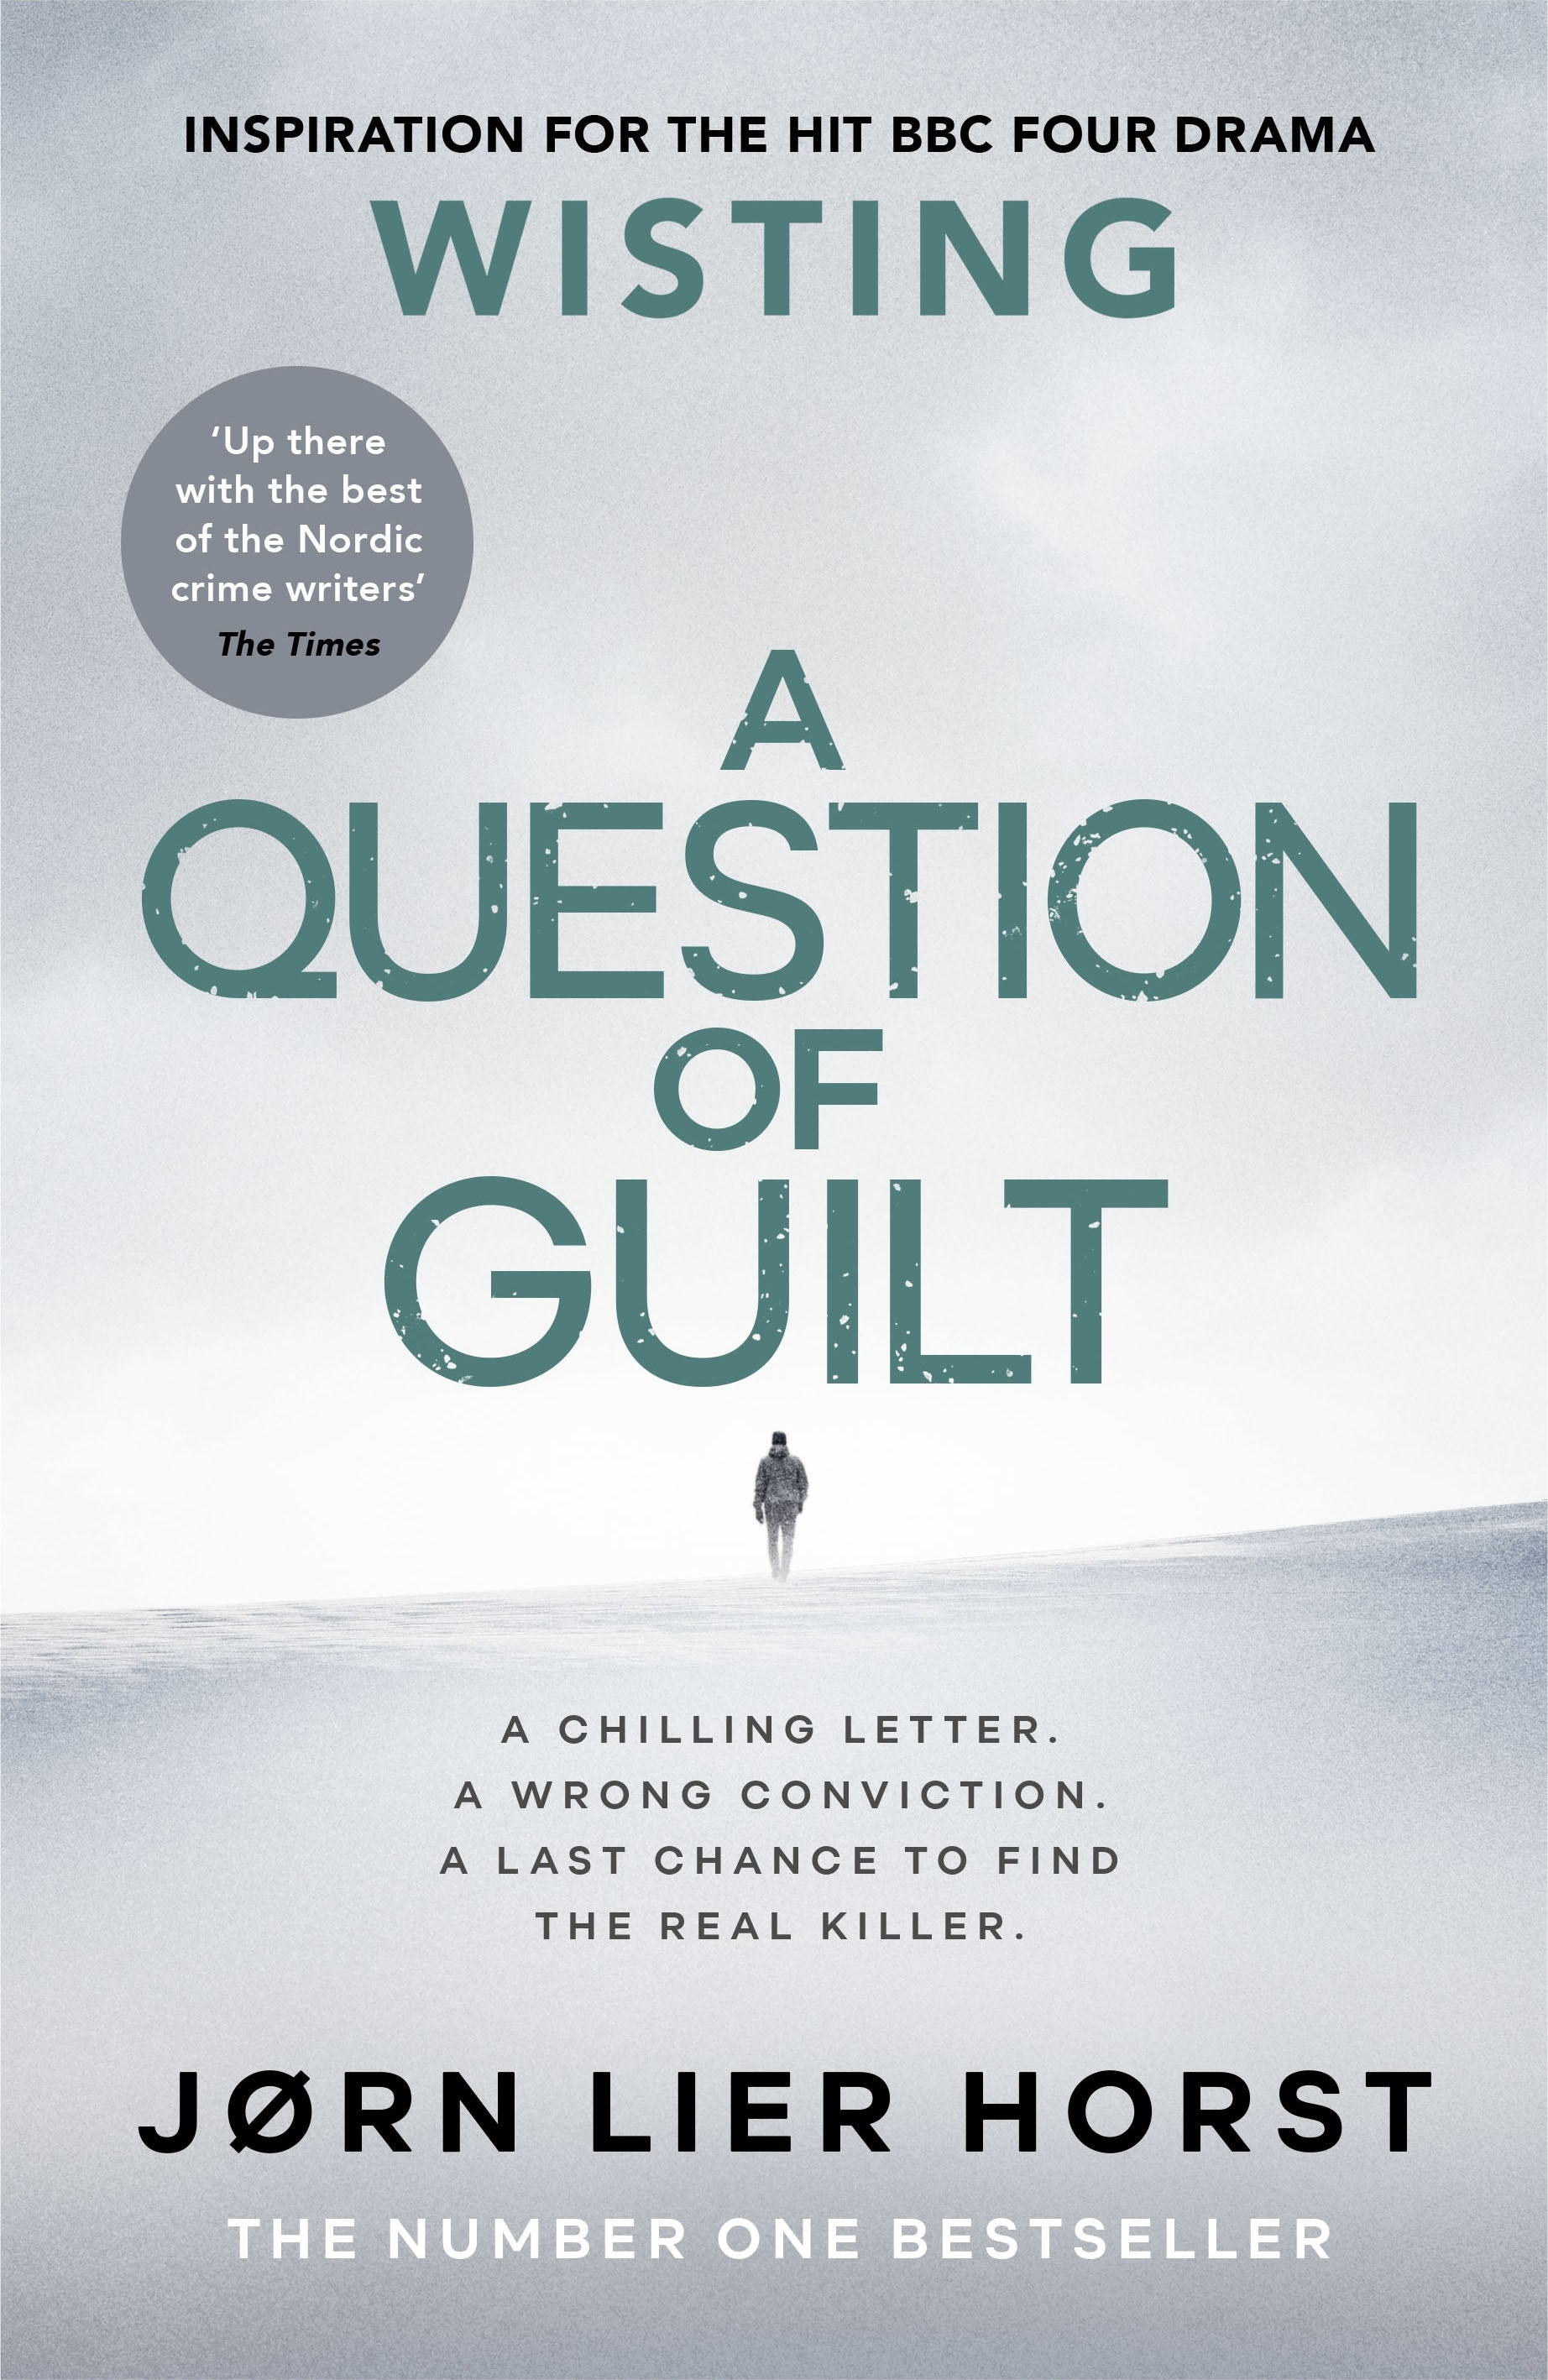 Book “A Question of Guilt” by Jørn Lier Horst — November 25, 2021